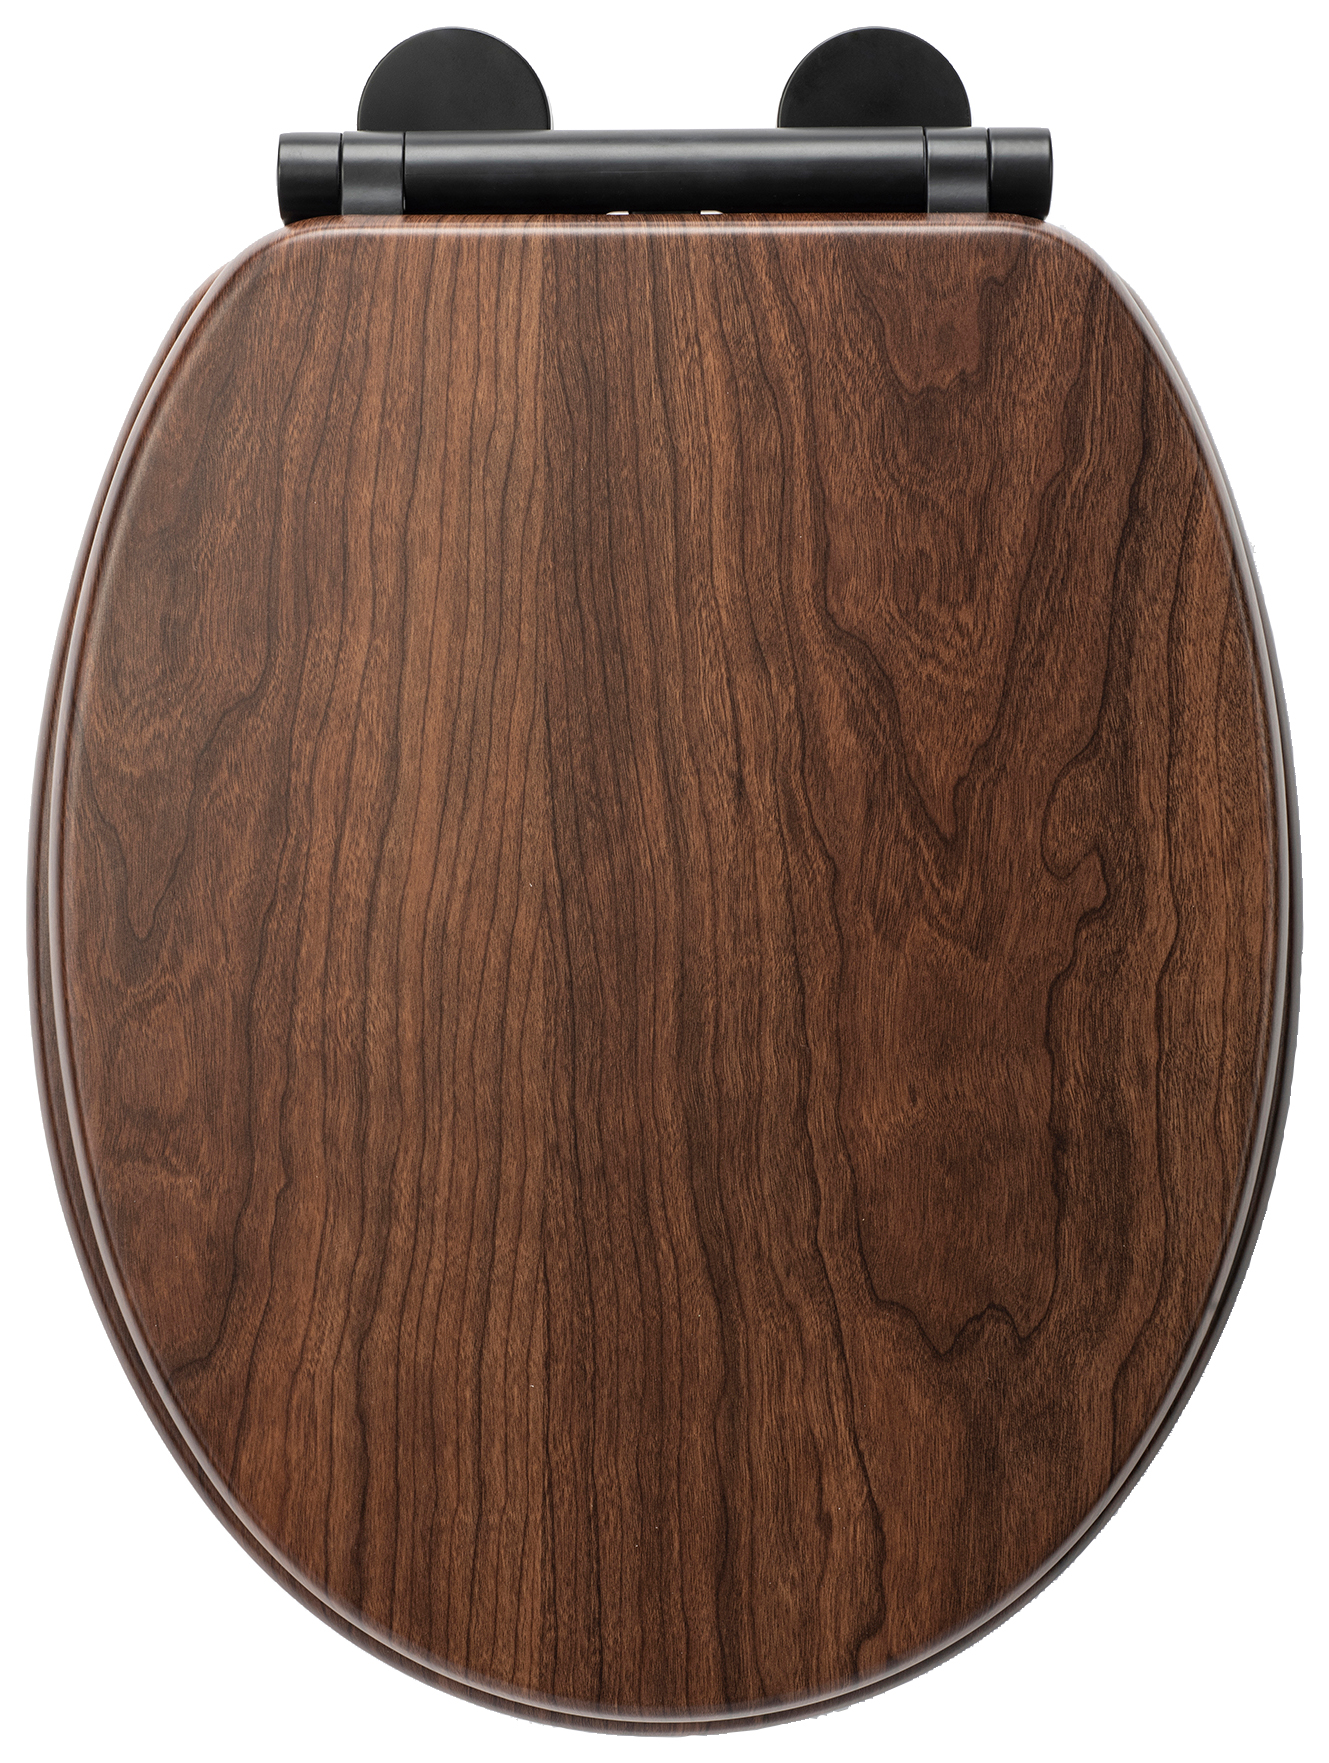 Croydex Flexi-Fix Wooden Soft Close Toilet Seat - Walnut Effect